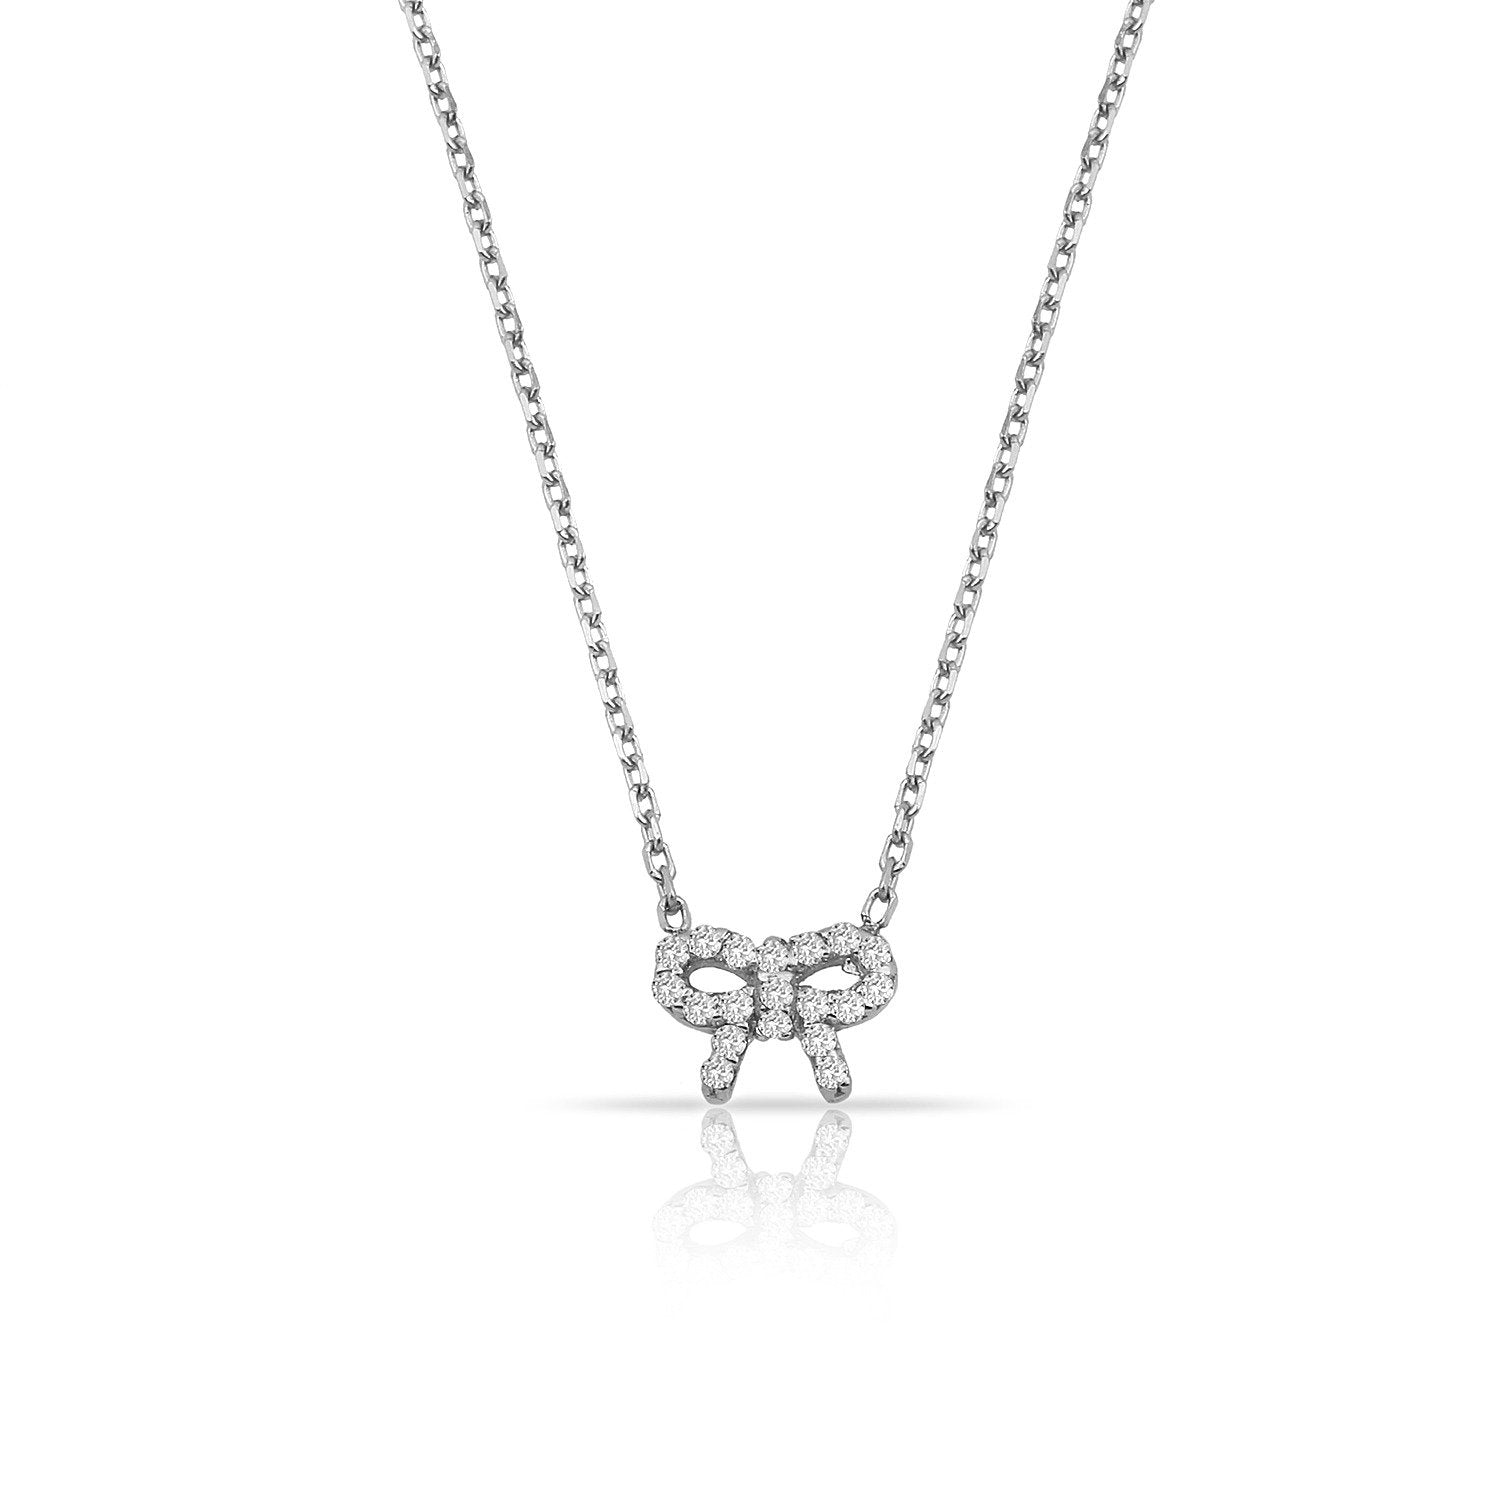 TSK Diamond Bow Necklace JEWELRY The Sis Kiss 14k White Gold